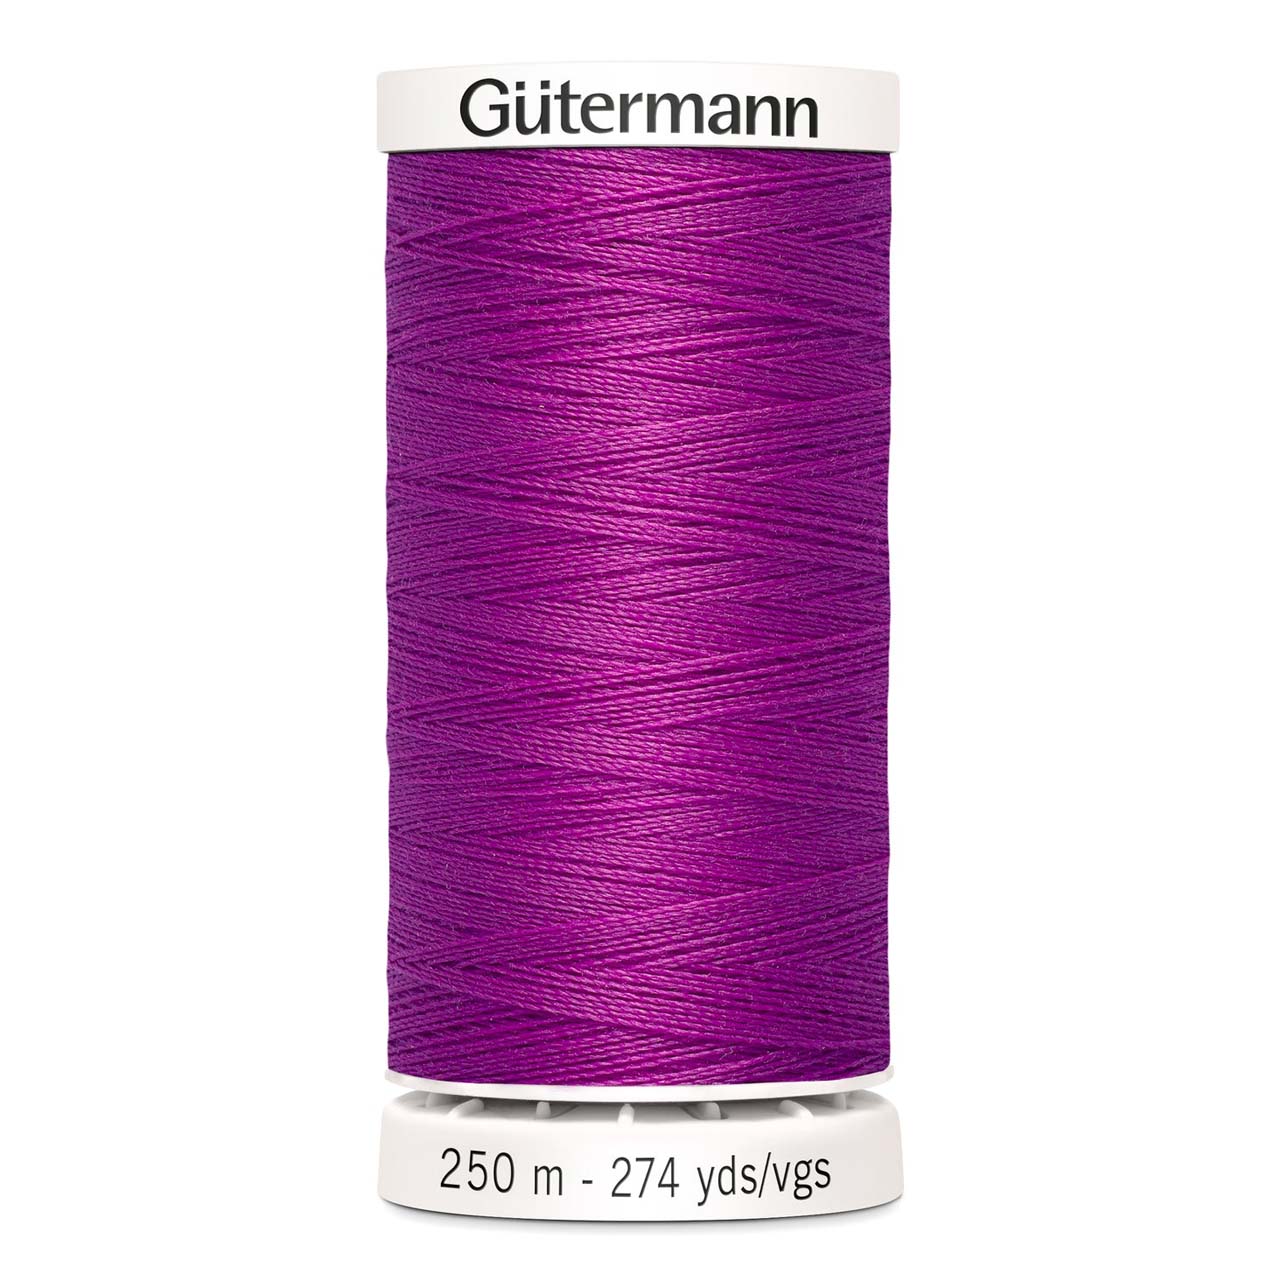 Gutermann thread 321 sewing thread 250 metres